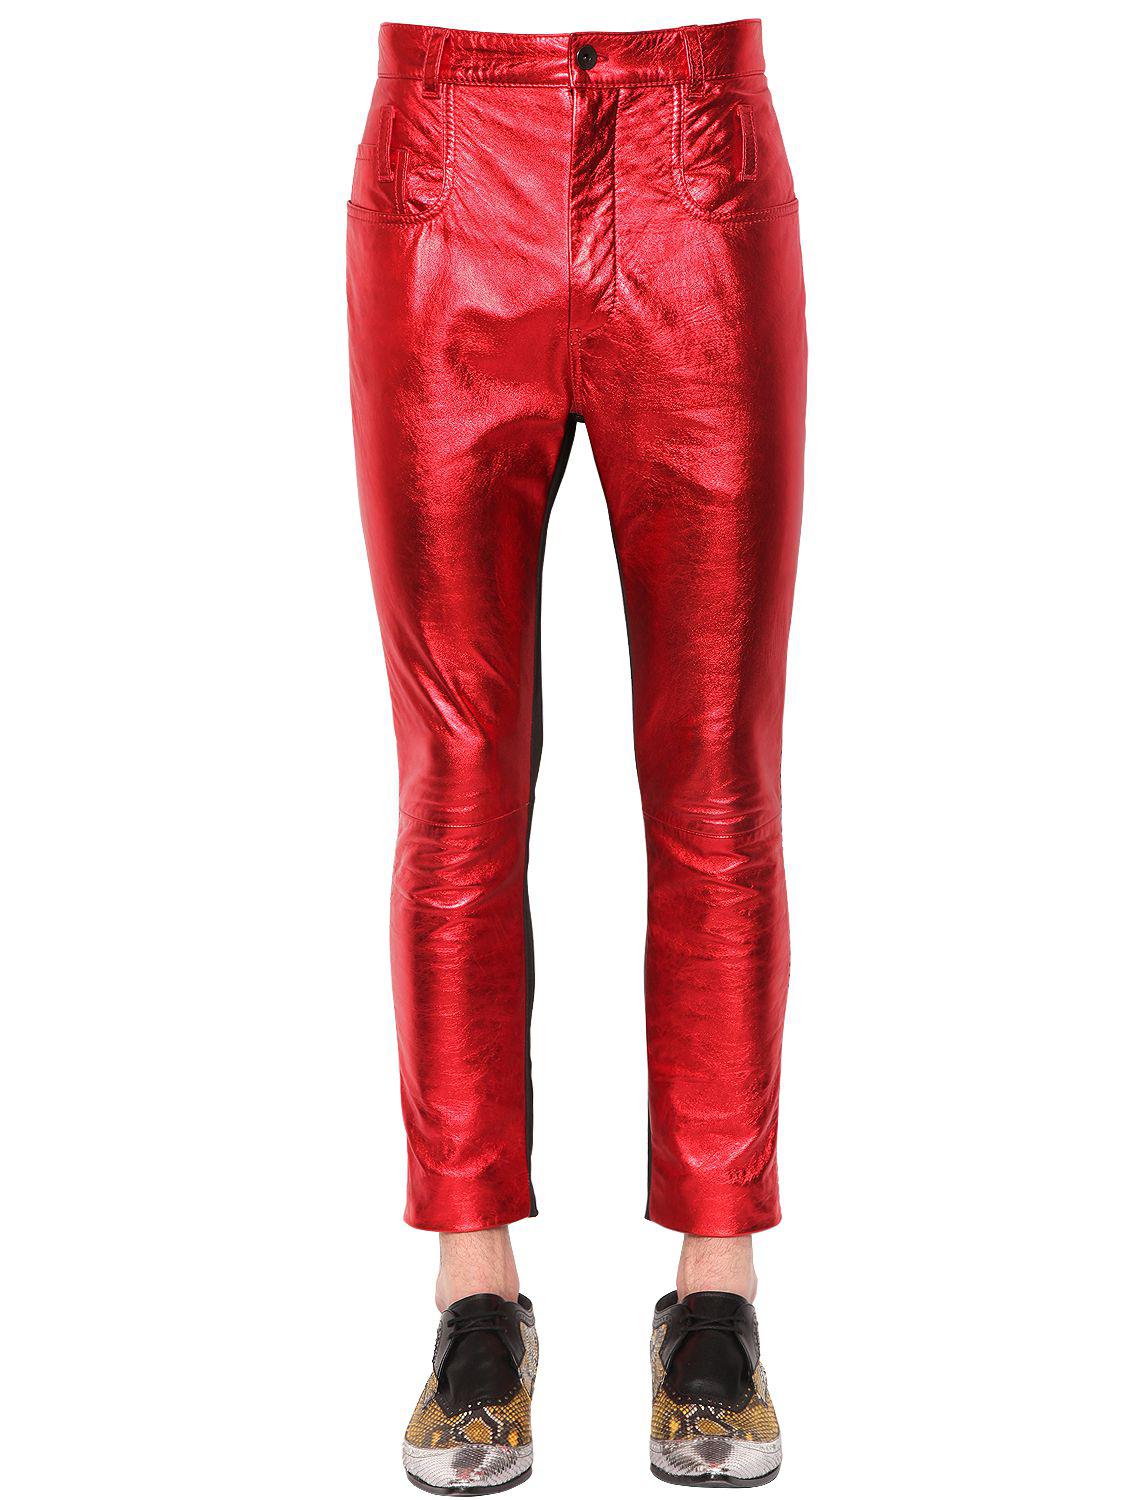 Haider Ackermann Skinny Metallic Leather & Suede Pants in Metallic Red ...